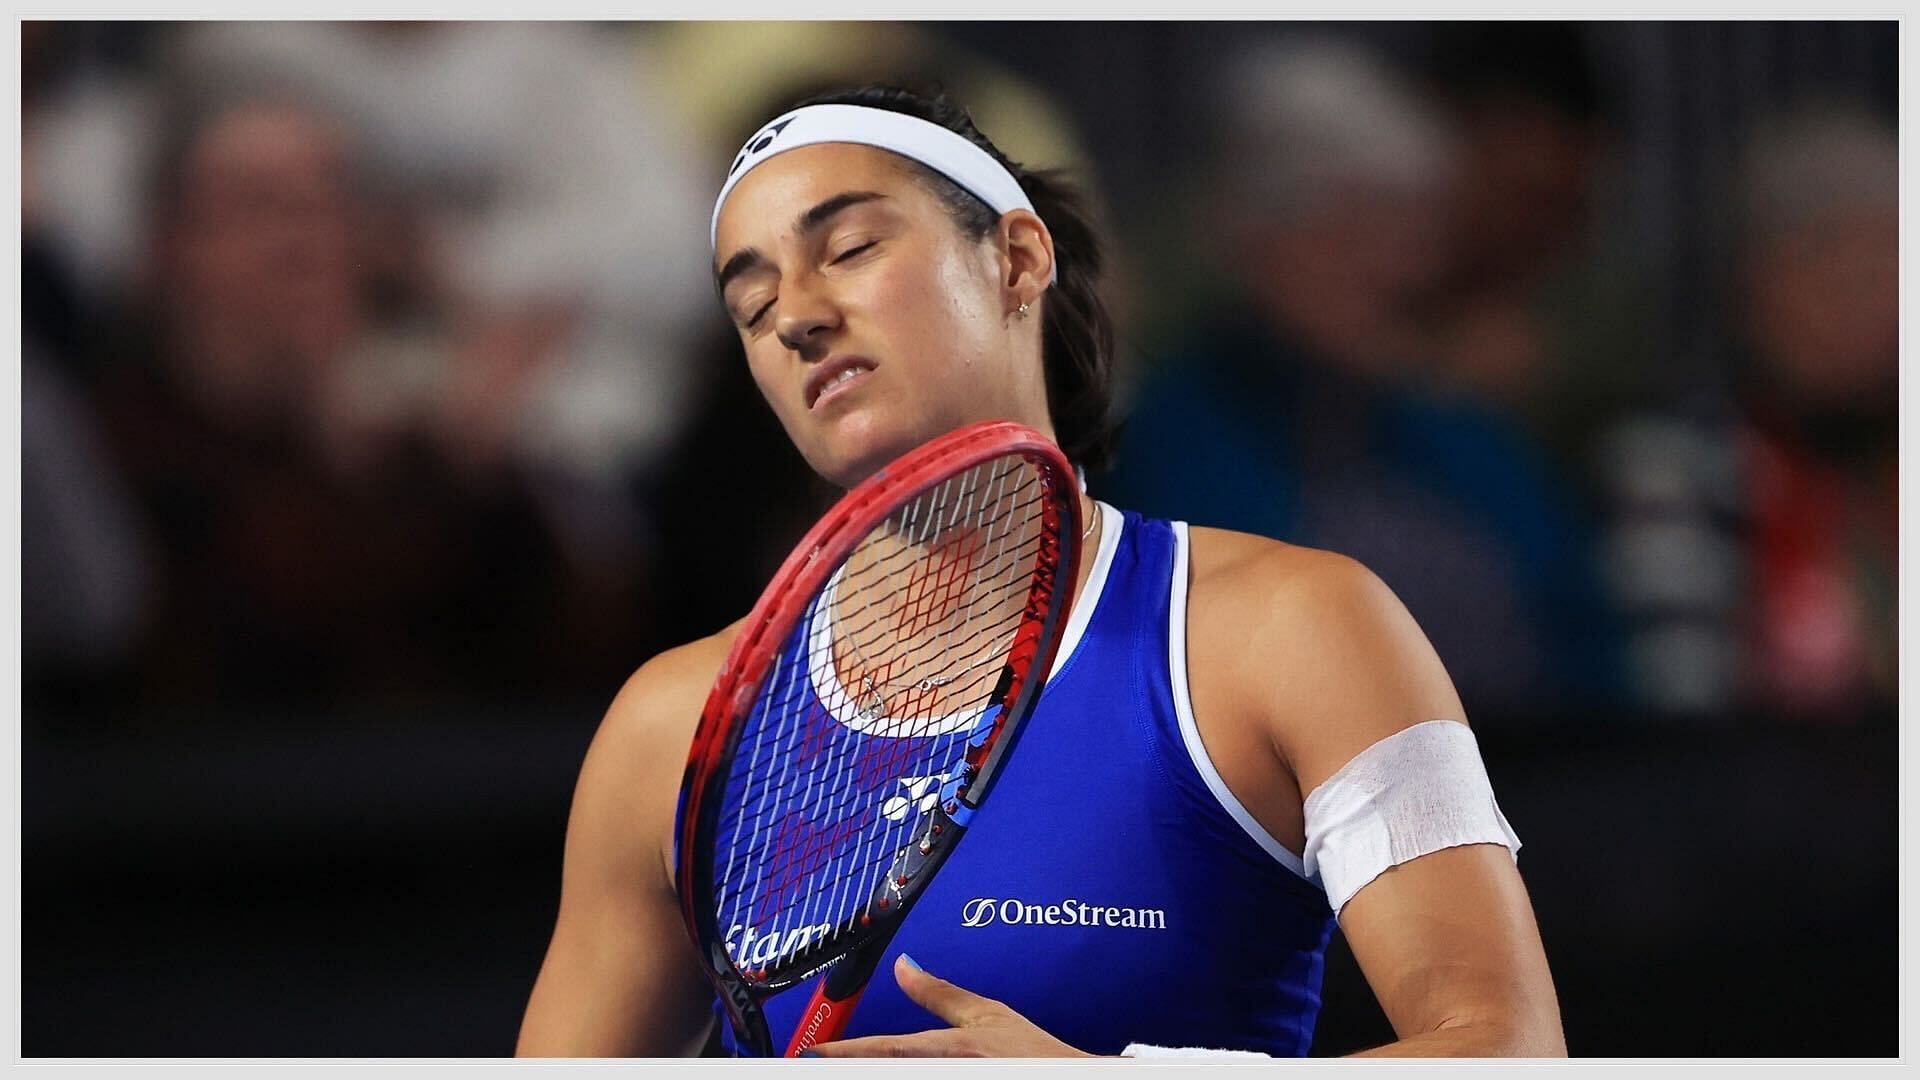 Caroline Garcia loses in the third round of the Italian Open